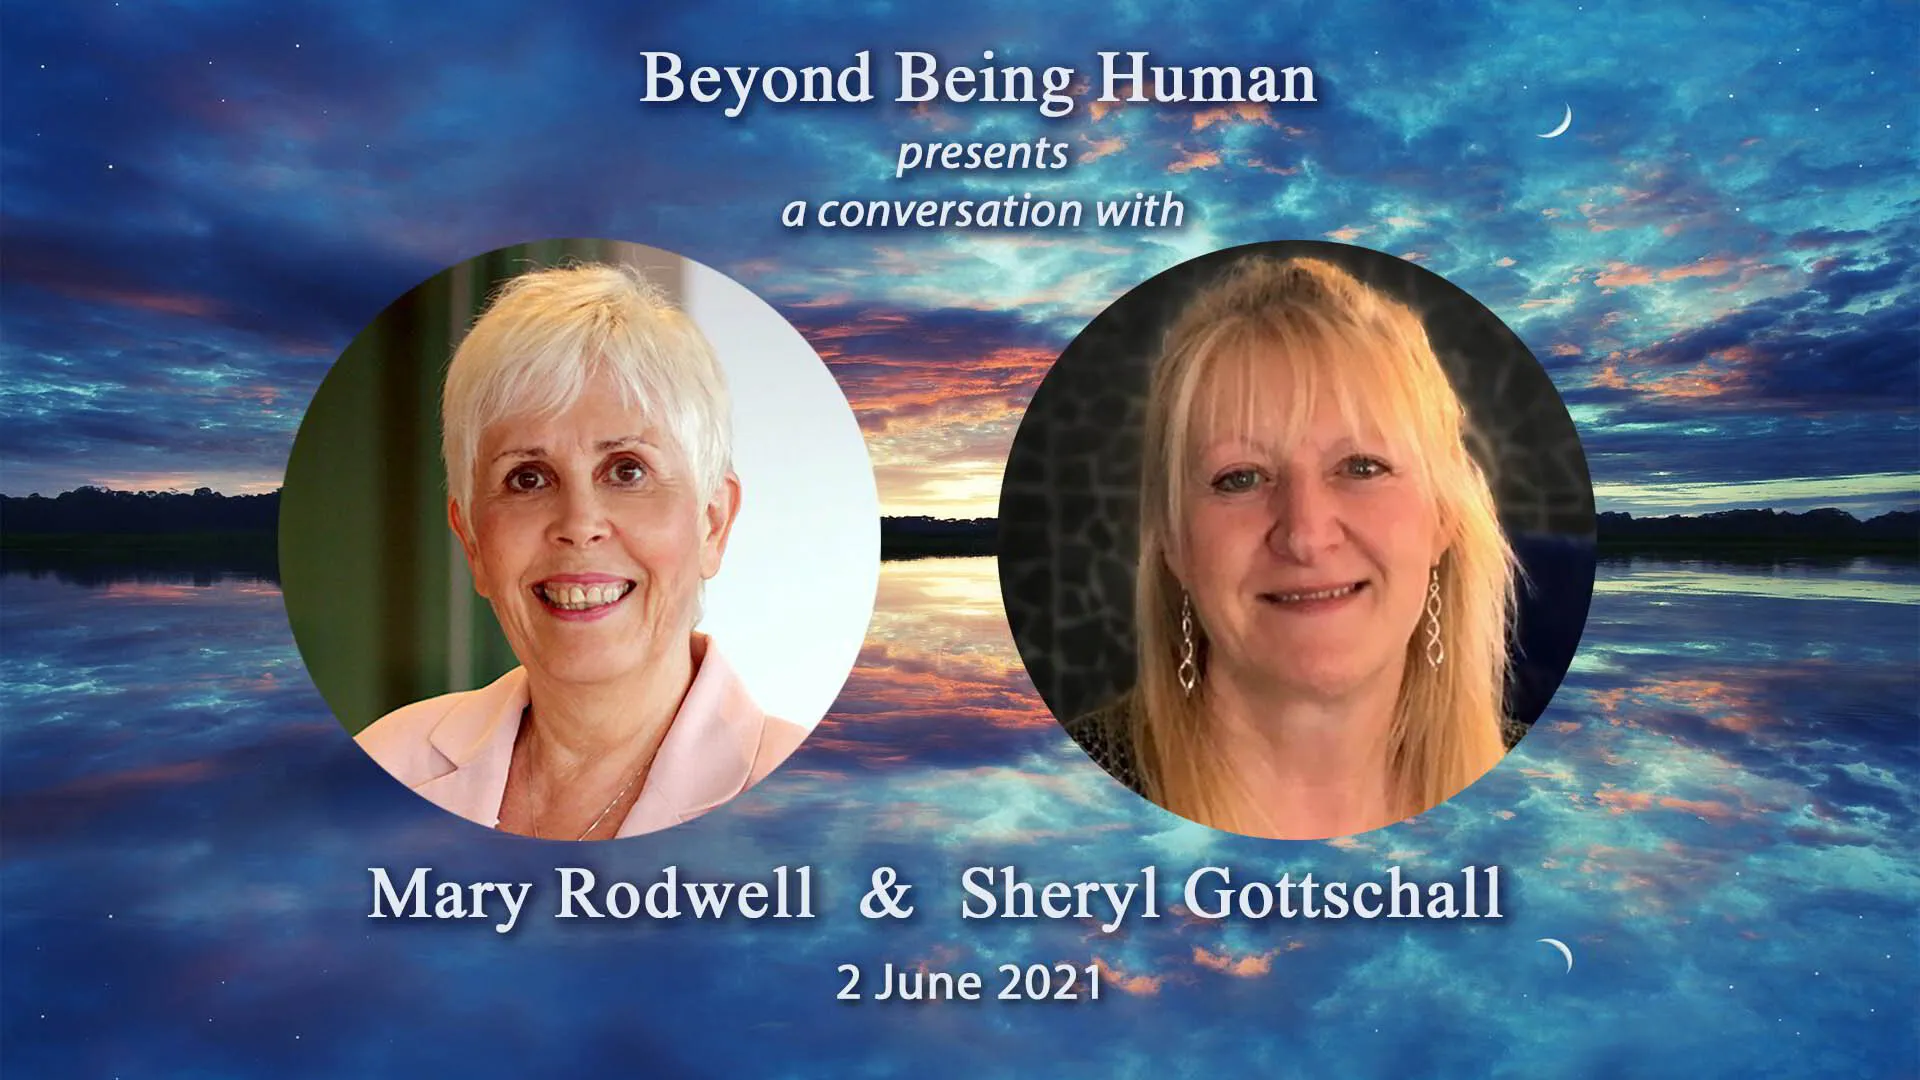 Mary Rodwell & Sheryl Gottschall